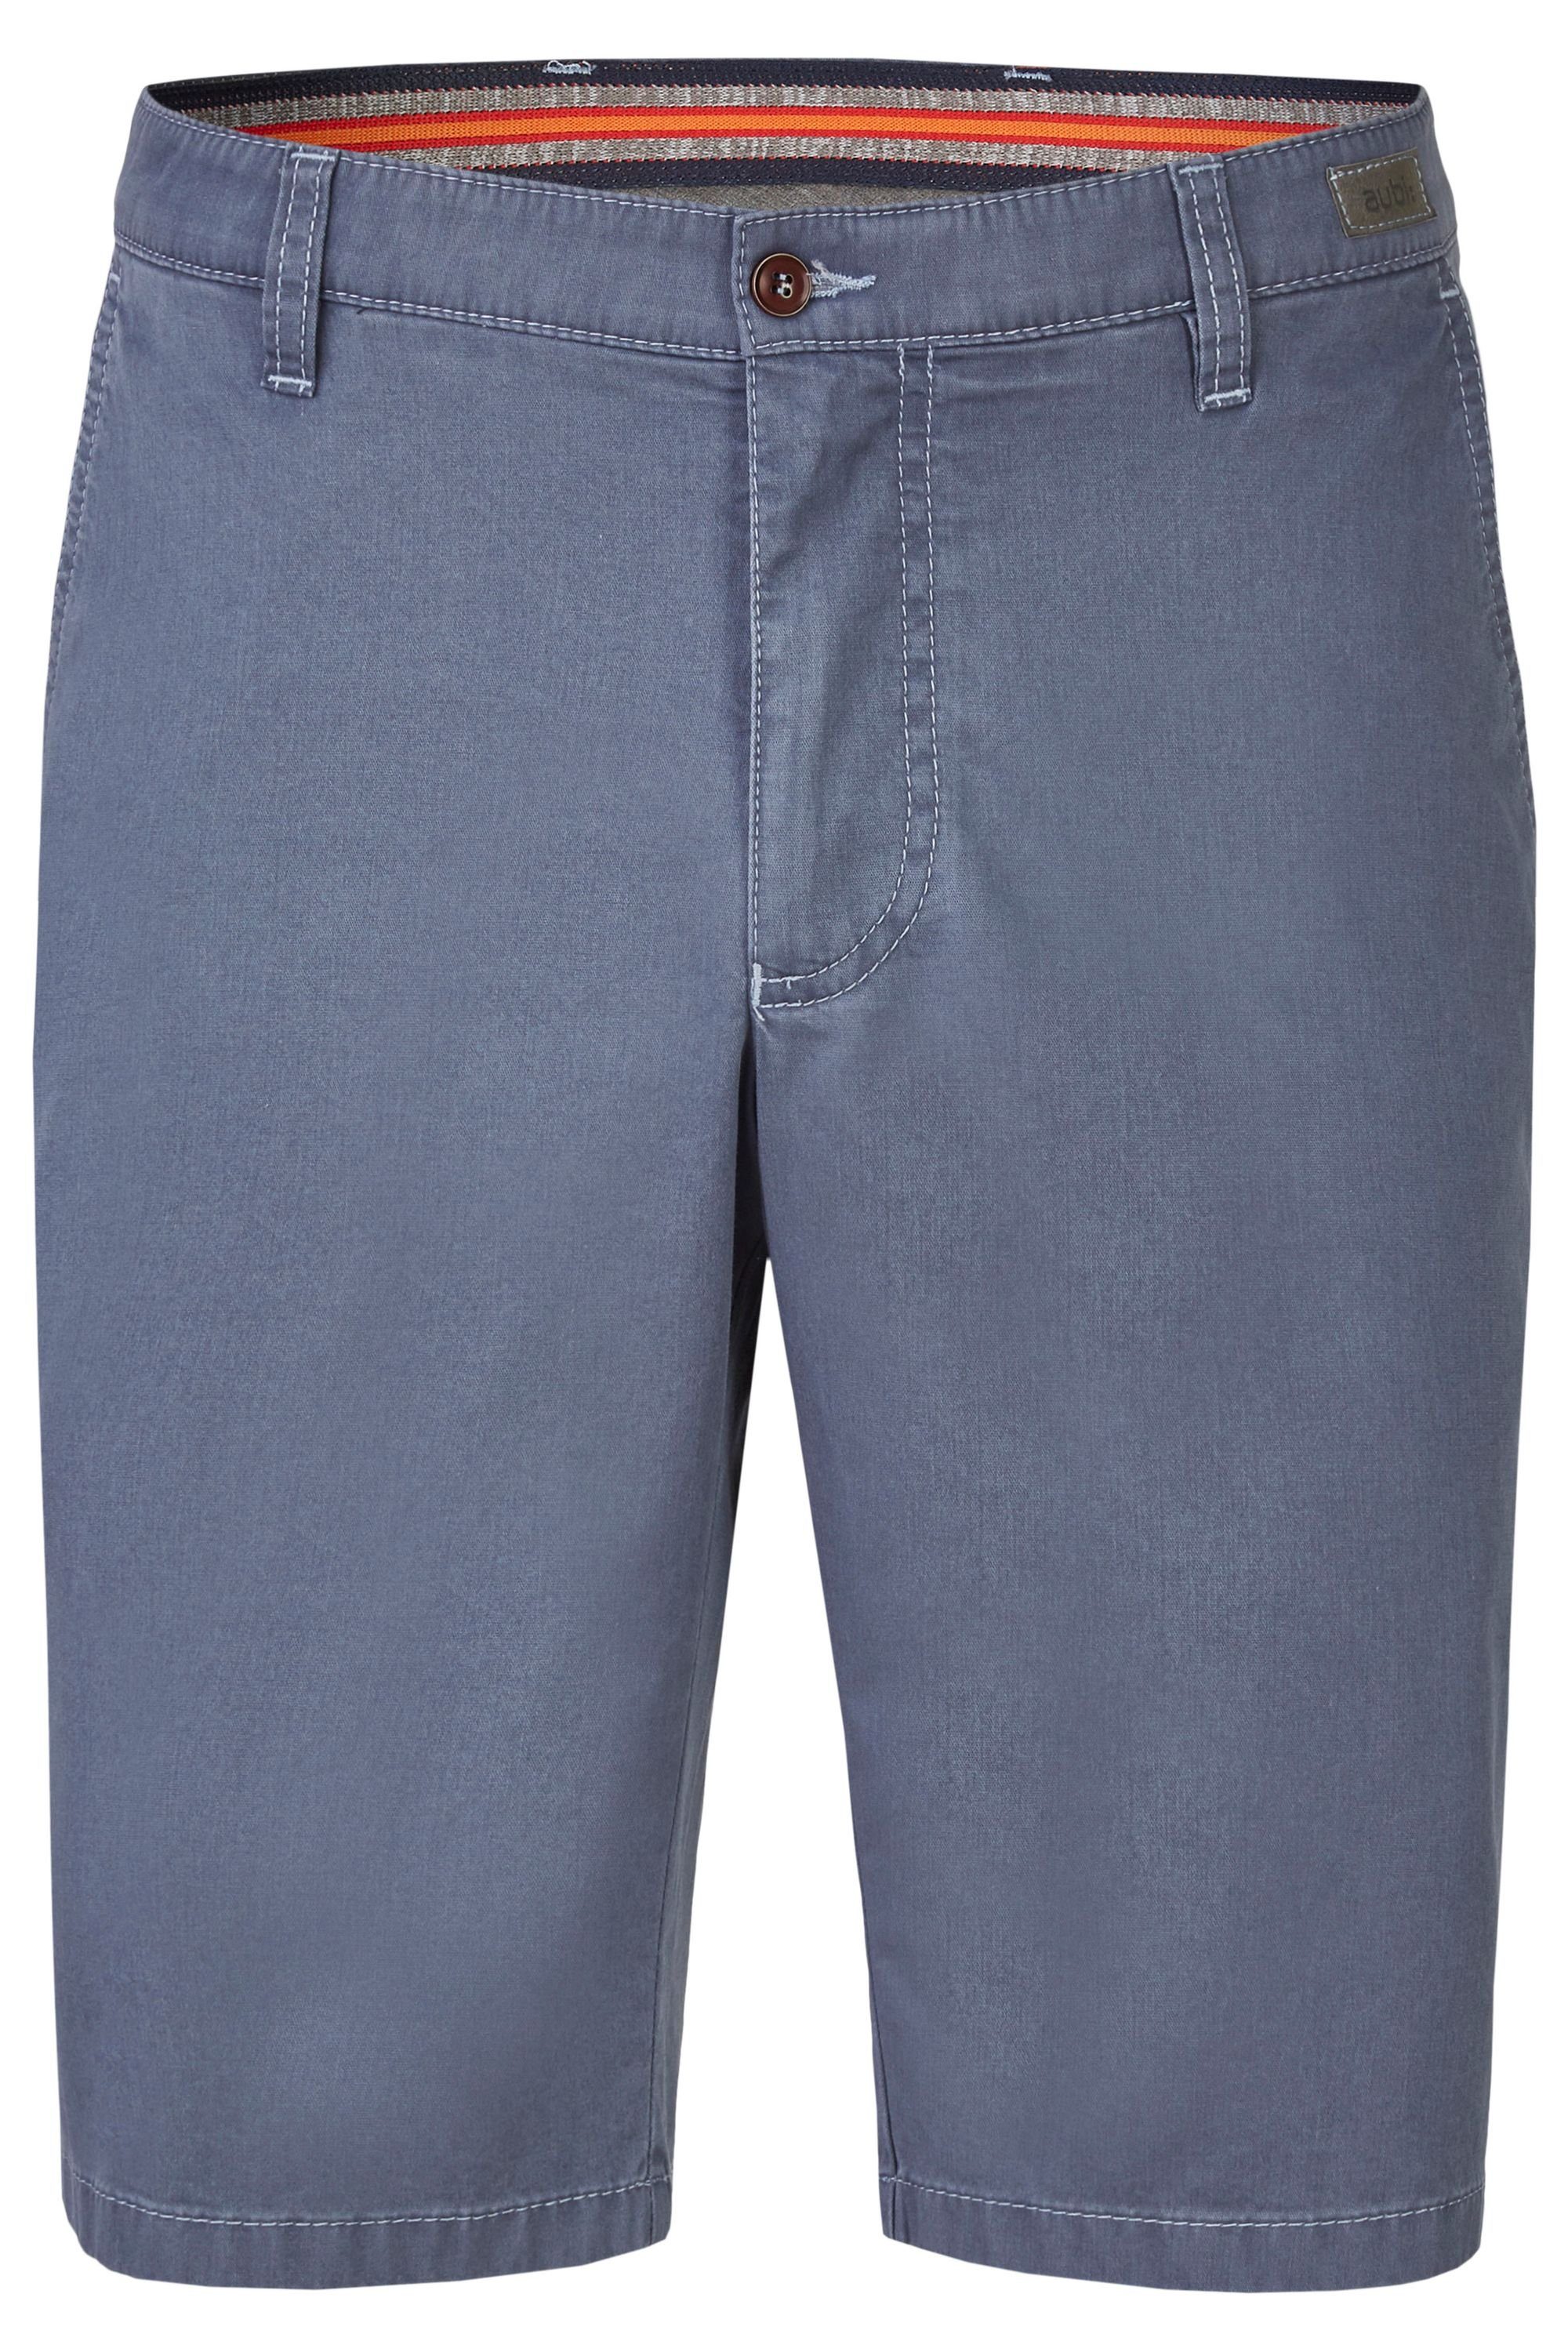 blau Modern Flex 688 Fit (44) Paisley High aubi: Shorts Stoffhose aubi Modell Herren